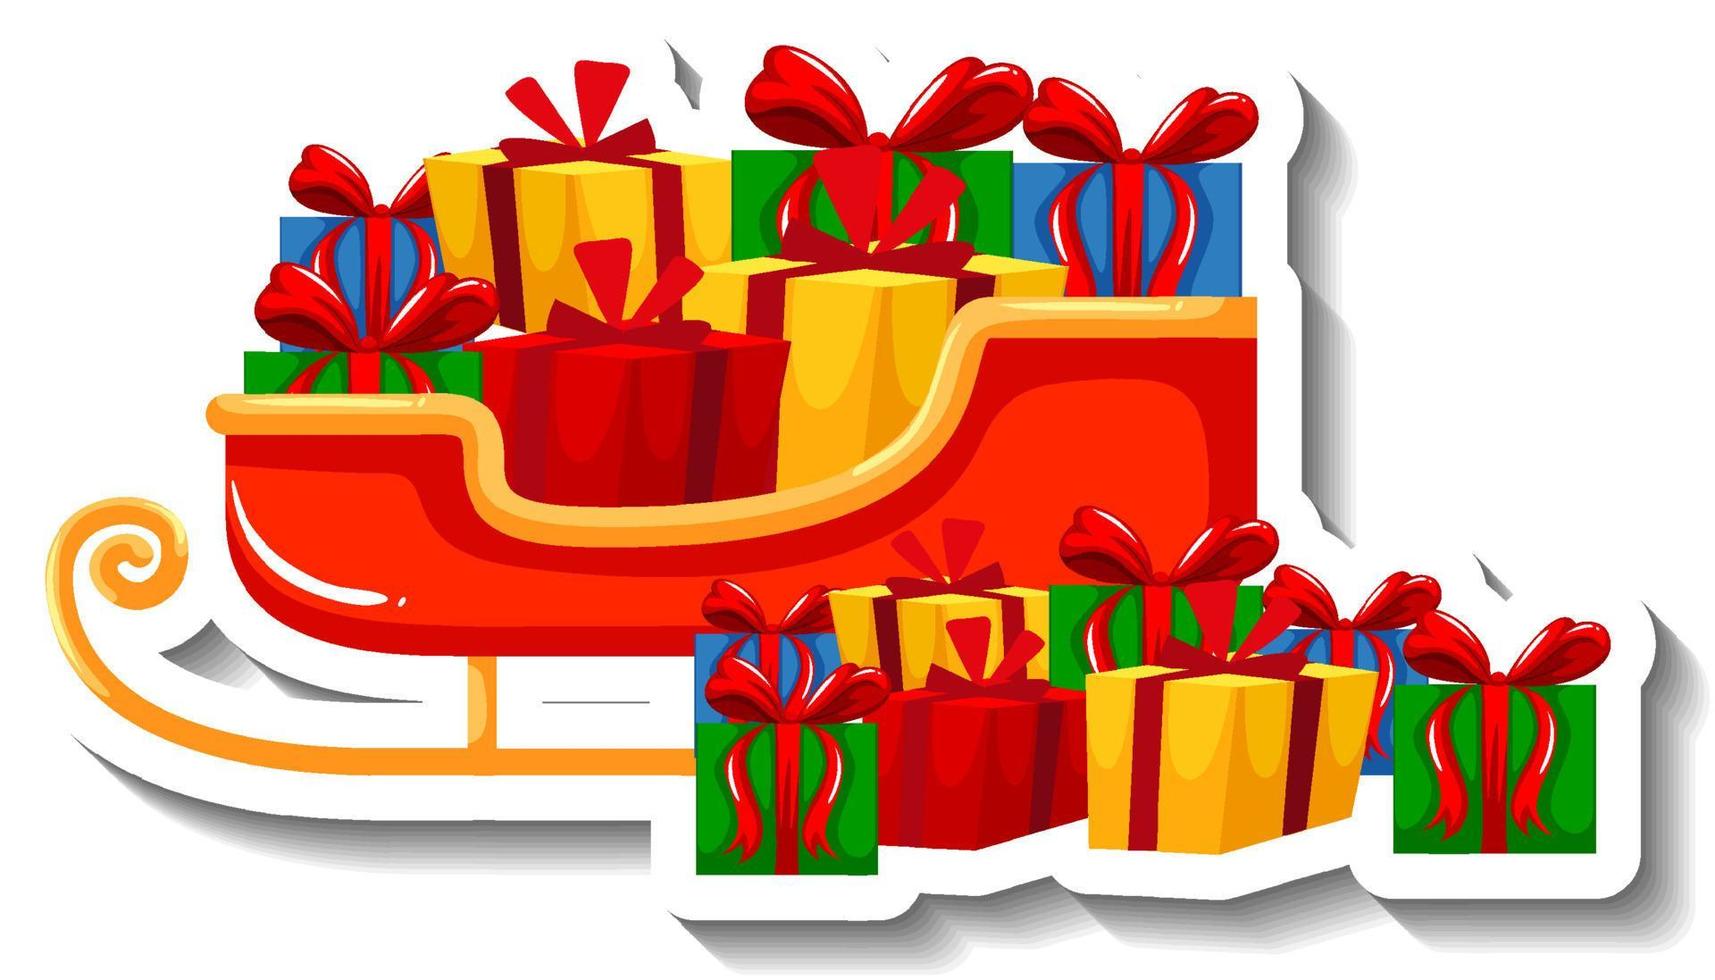 Christmas Sleigh with gift boxes cartoon sticker vector